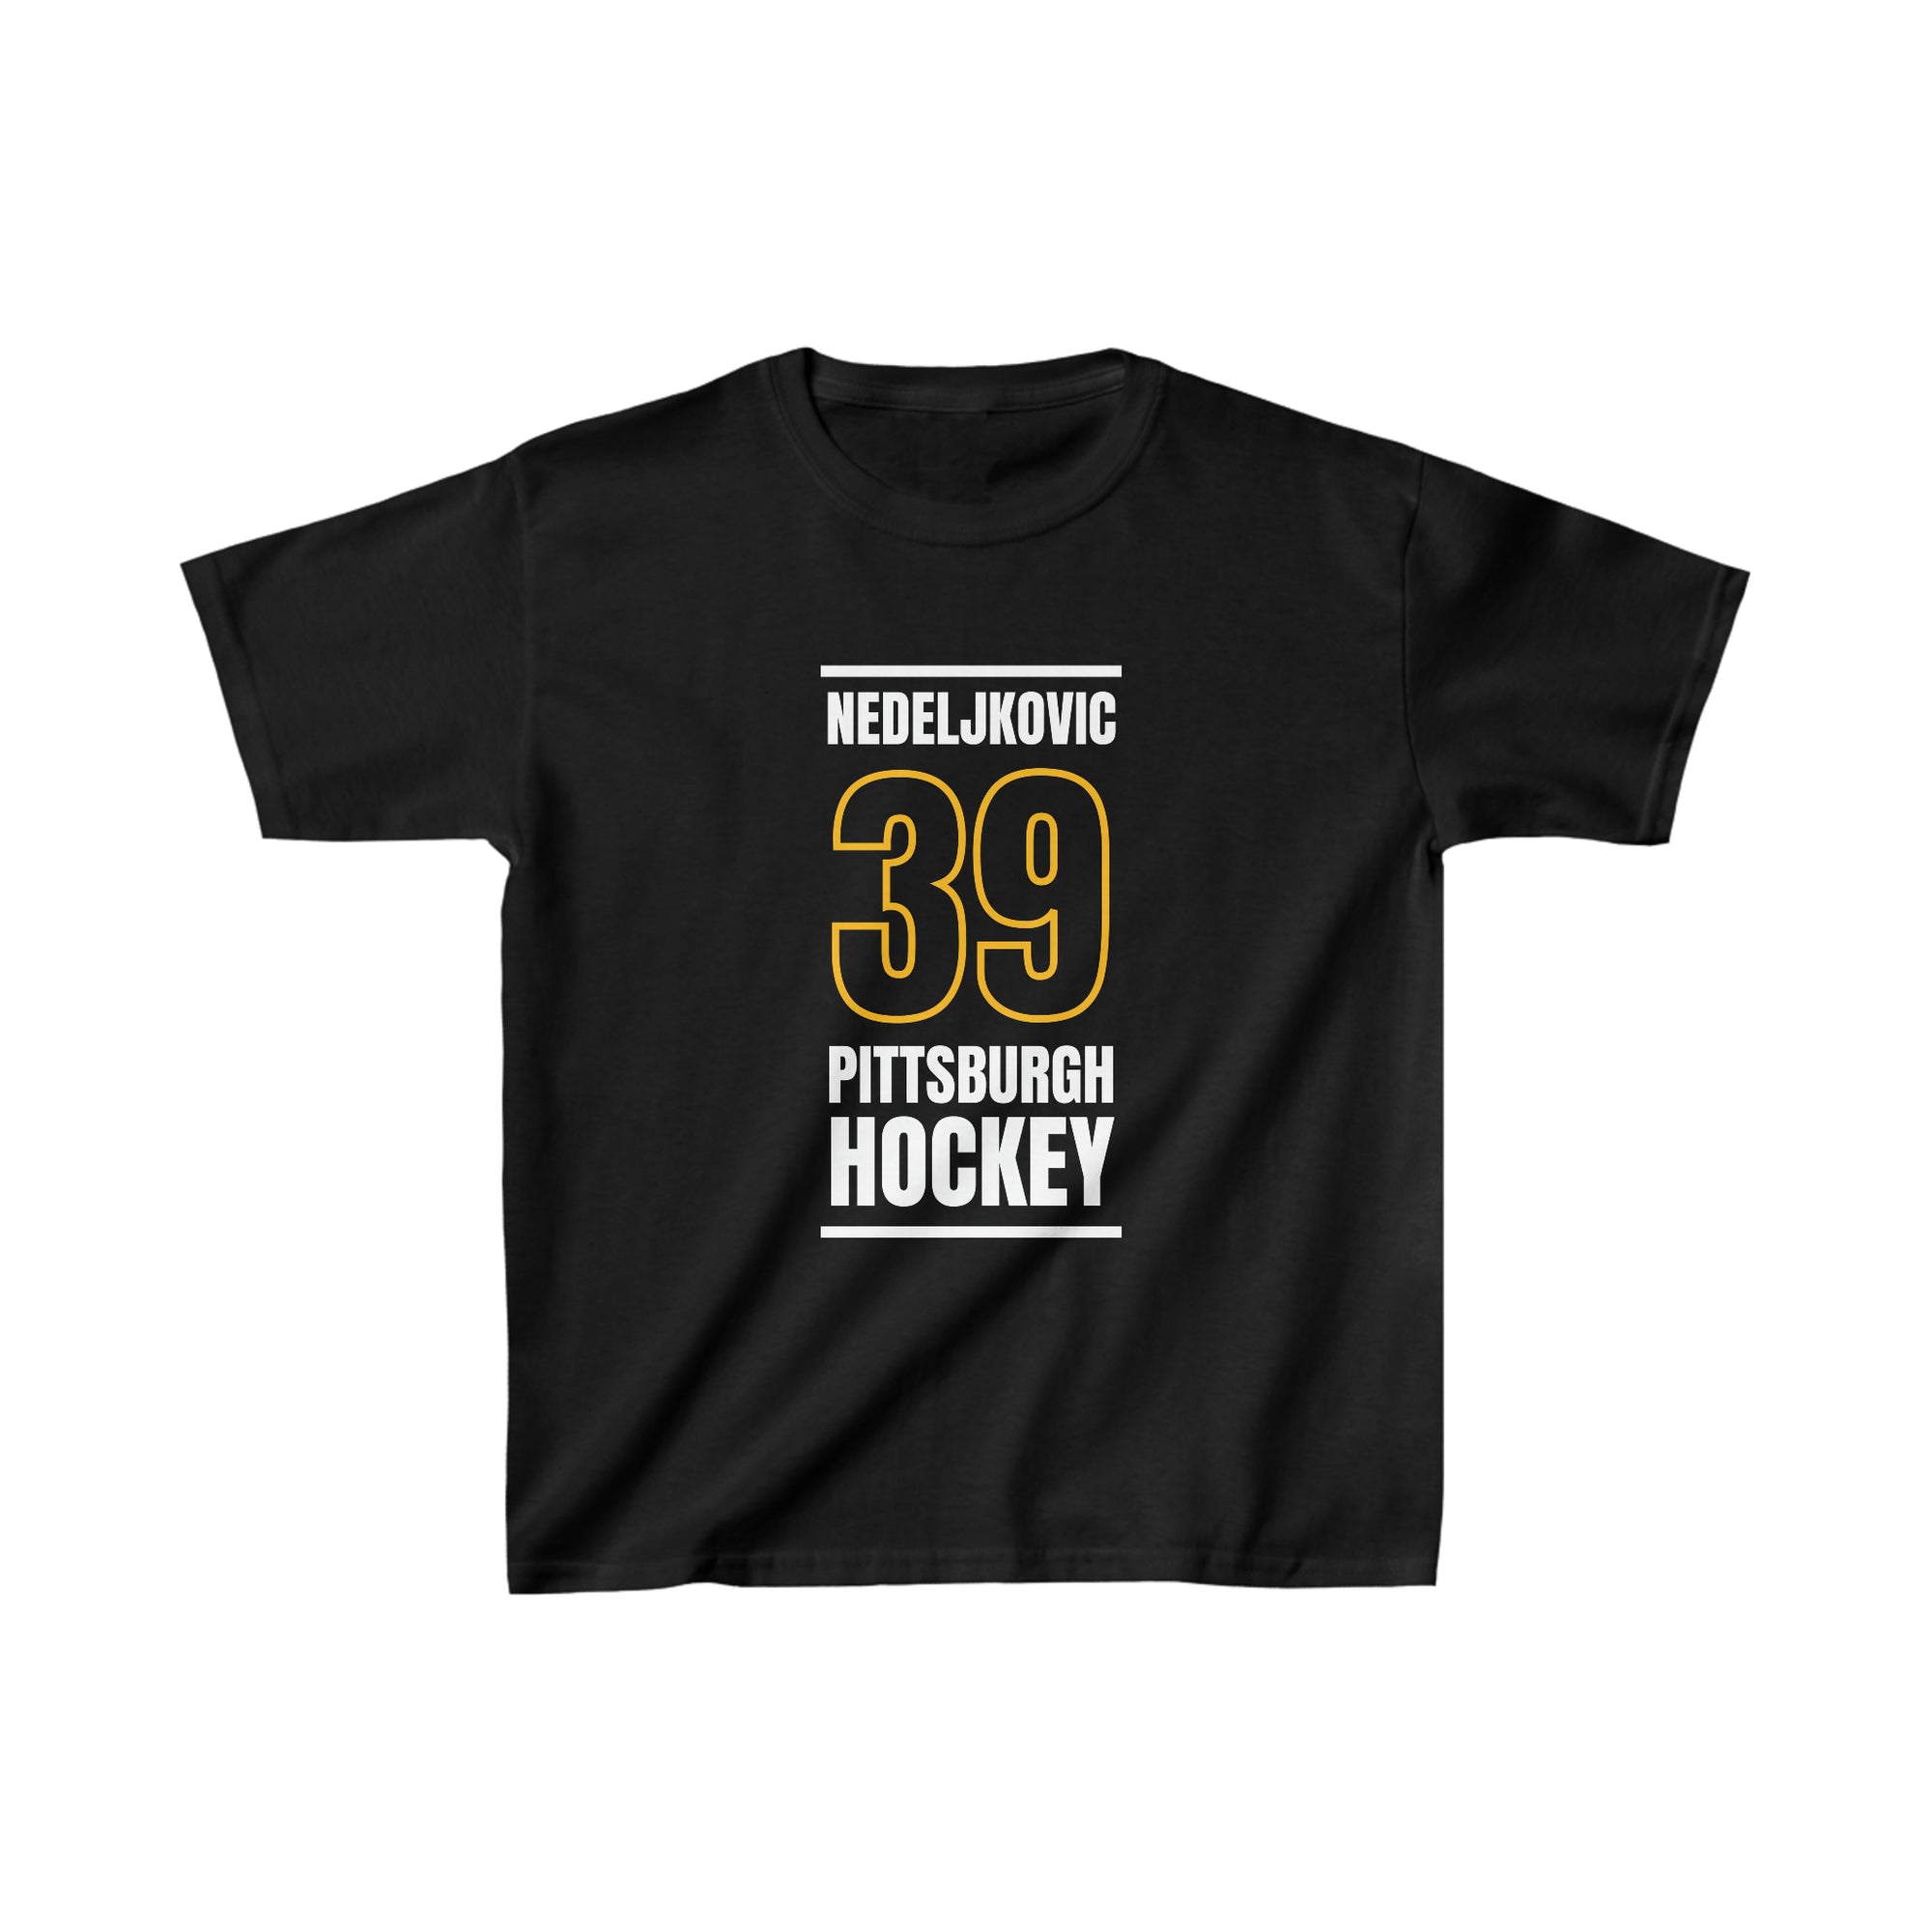 Nedeljkovic 39 Pittsburgh Hockey Black Vertical Design Kids Tee